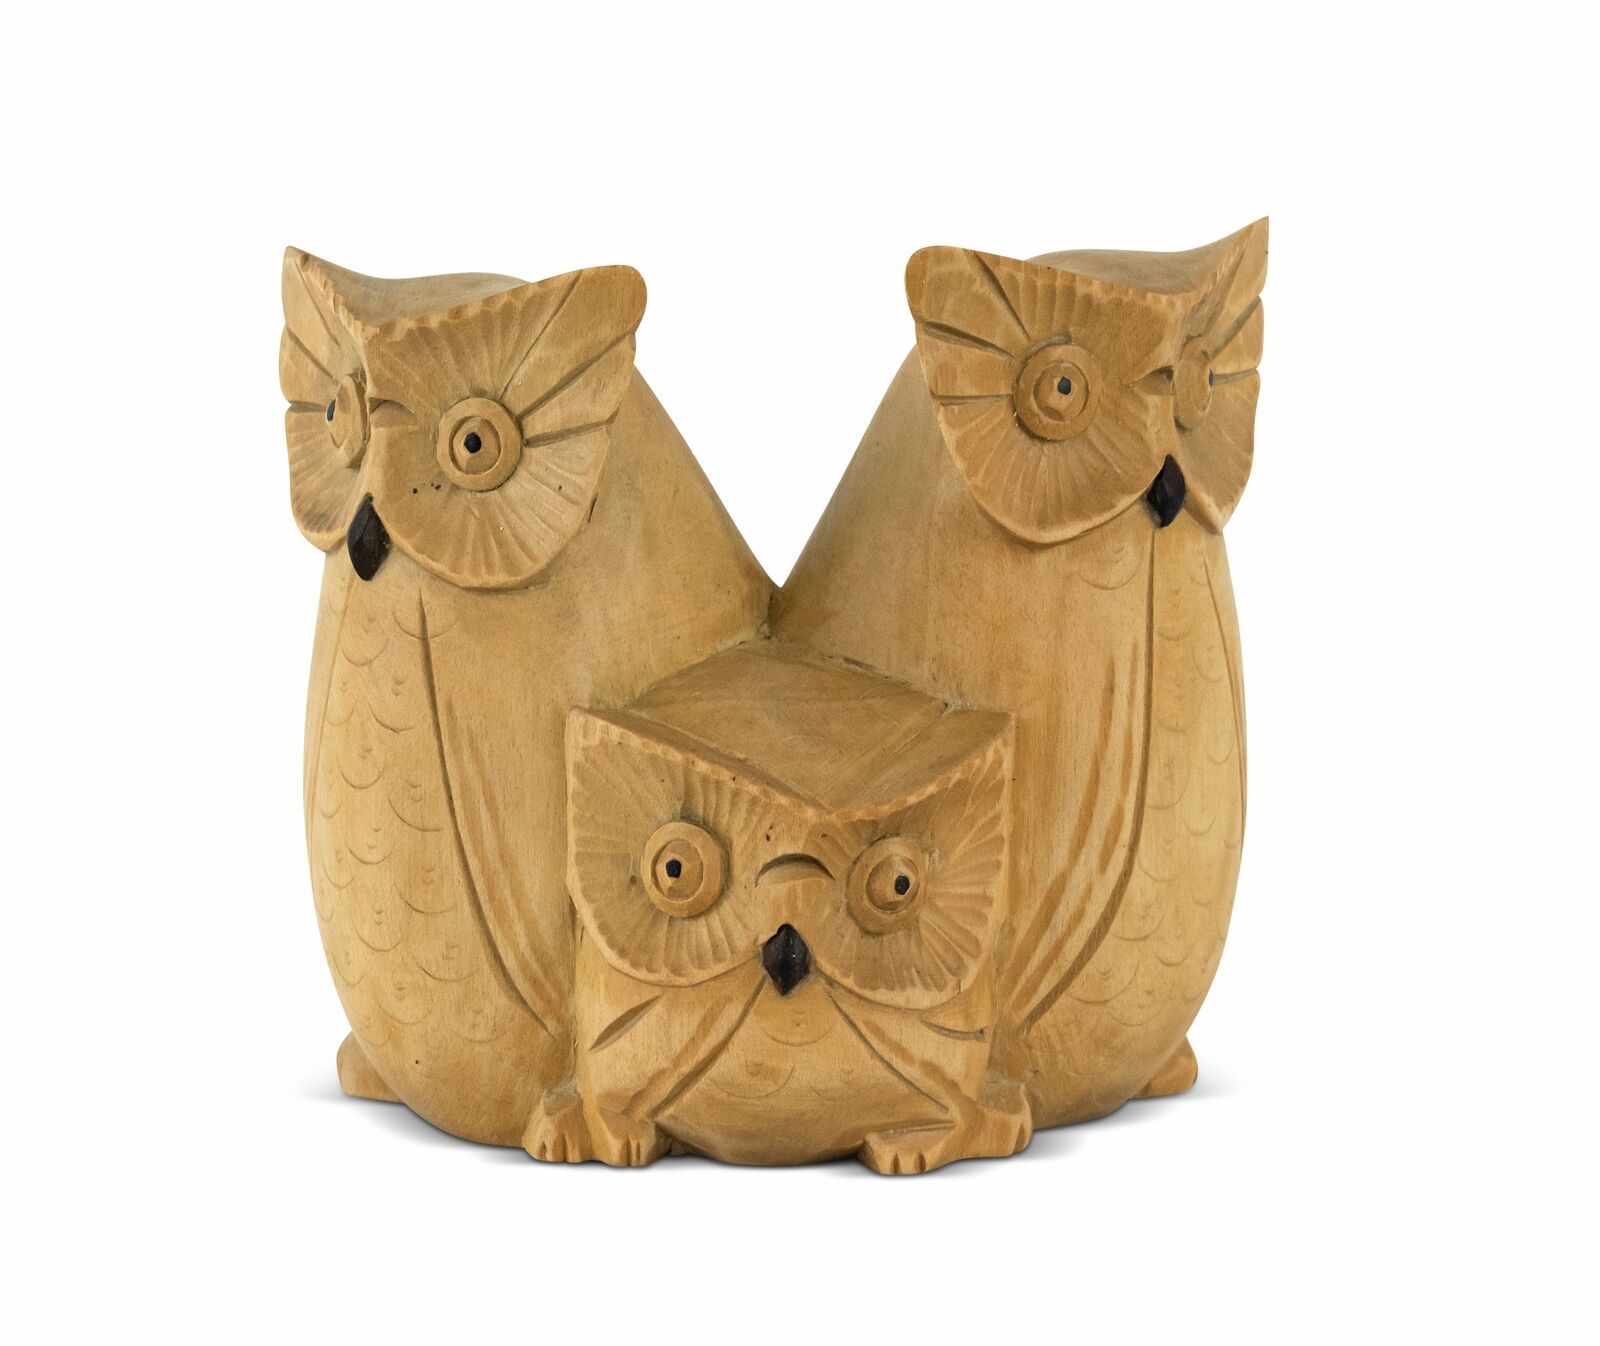 Wooden Handmade Owl & Family Figurine Hoot Statue Decor Sculpture Hand Carved